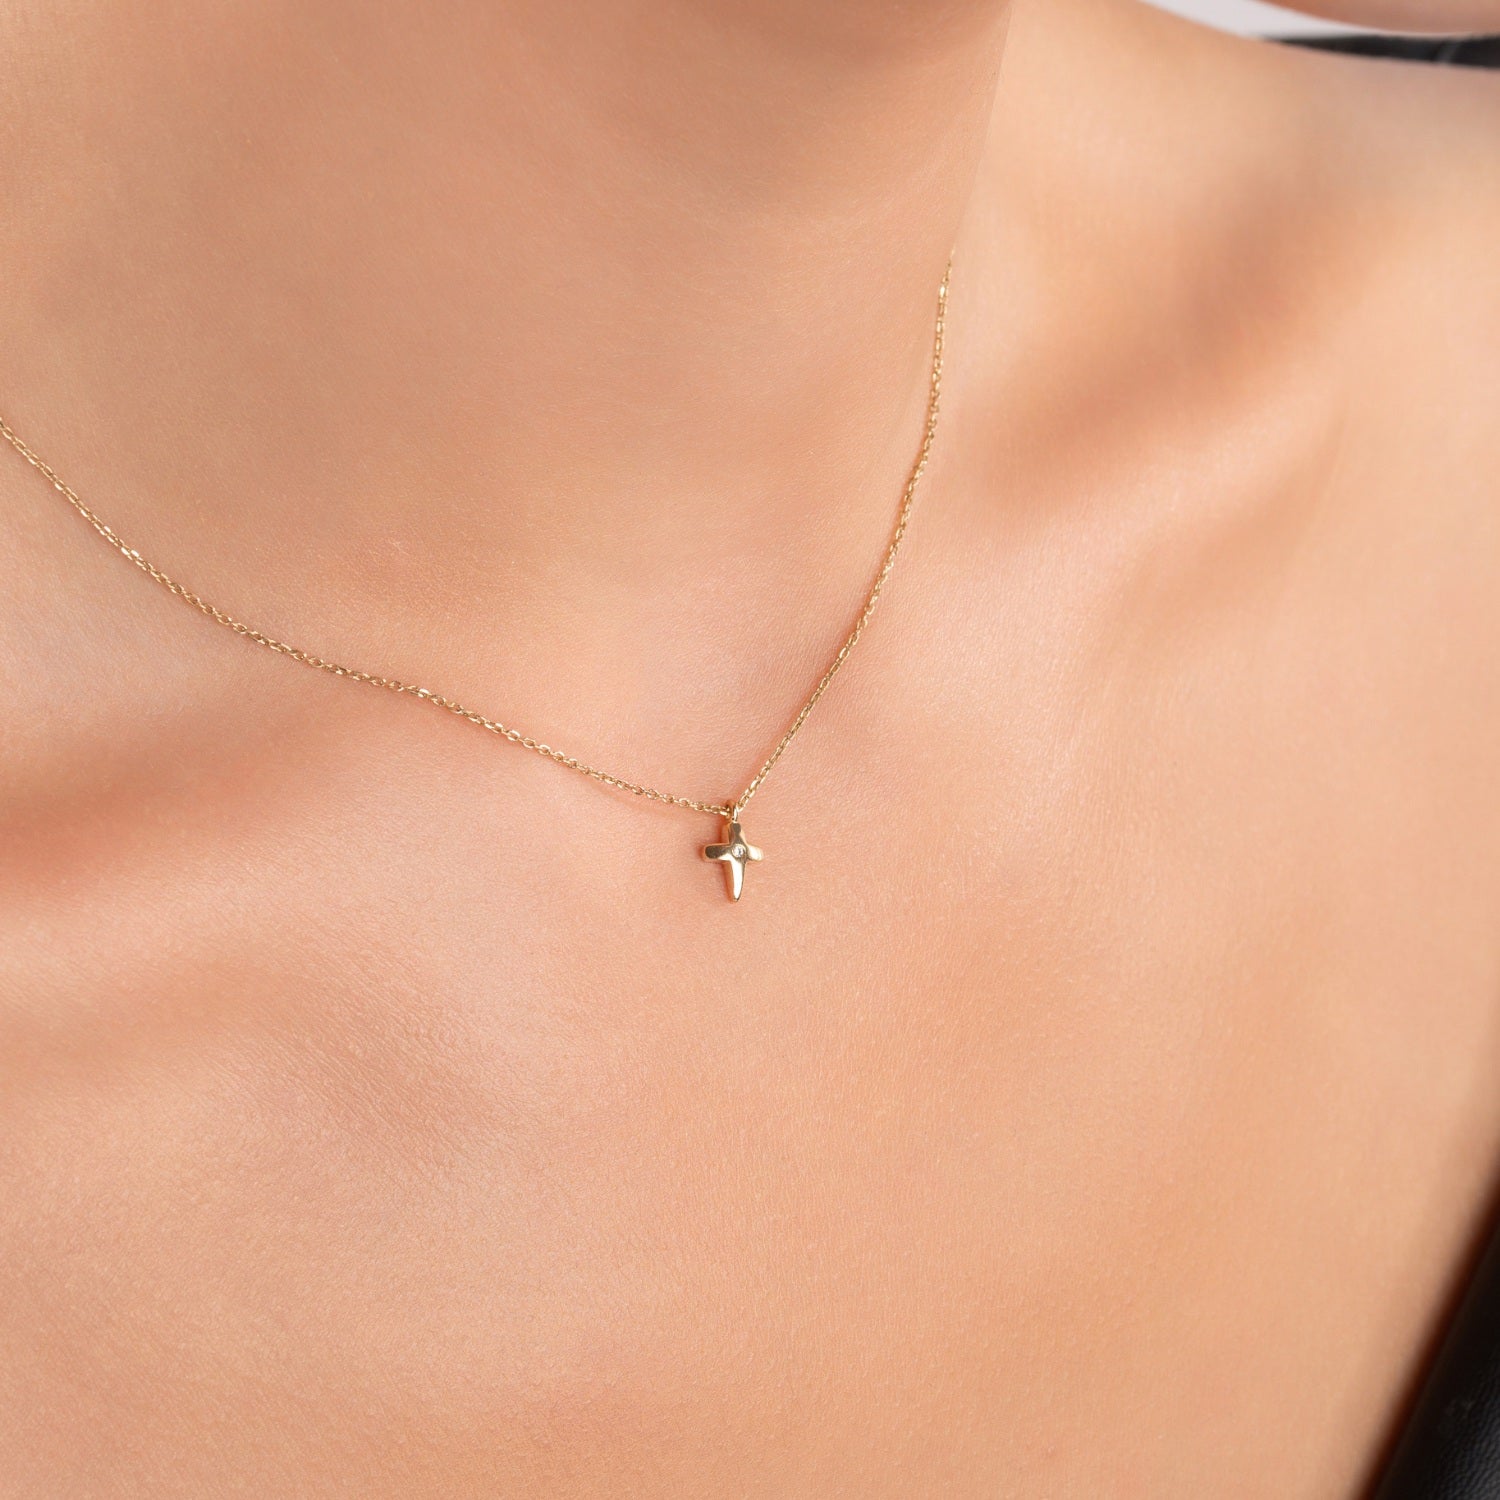 Tiny Cross Necklace with Diamond